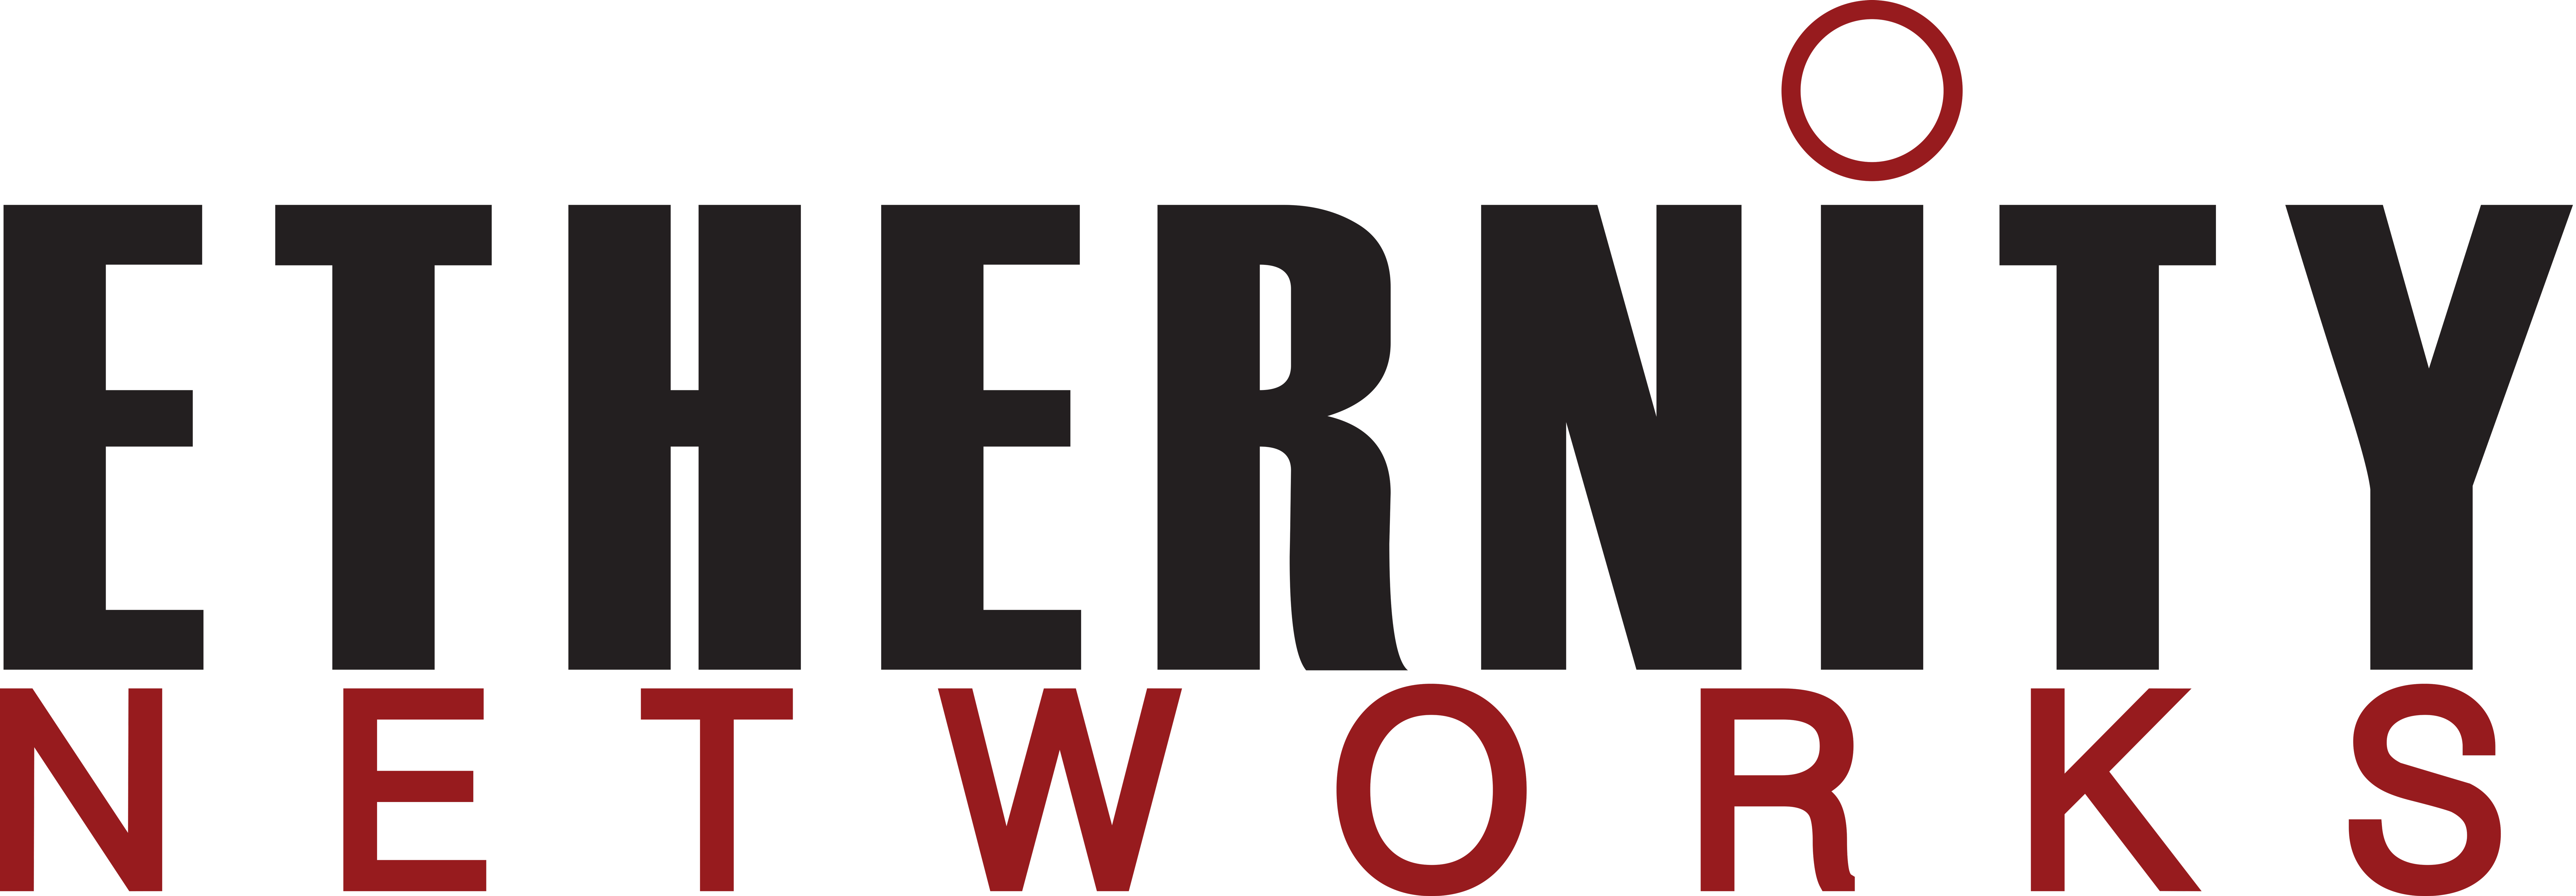 Ethernity Networks logo